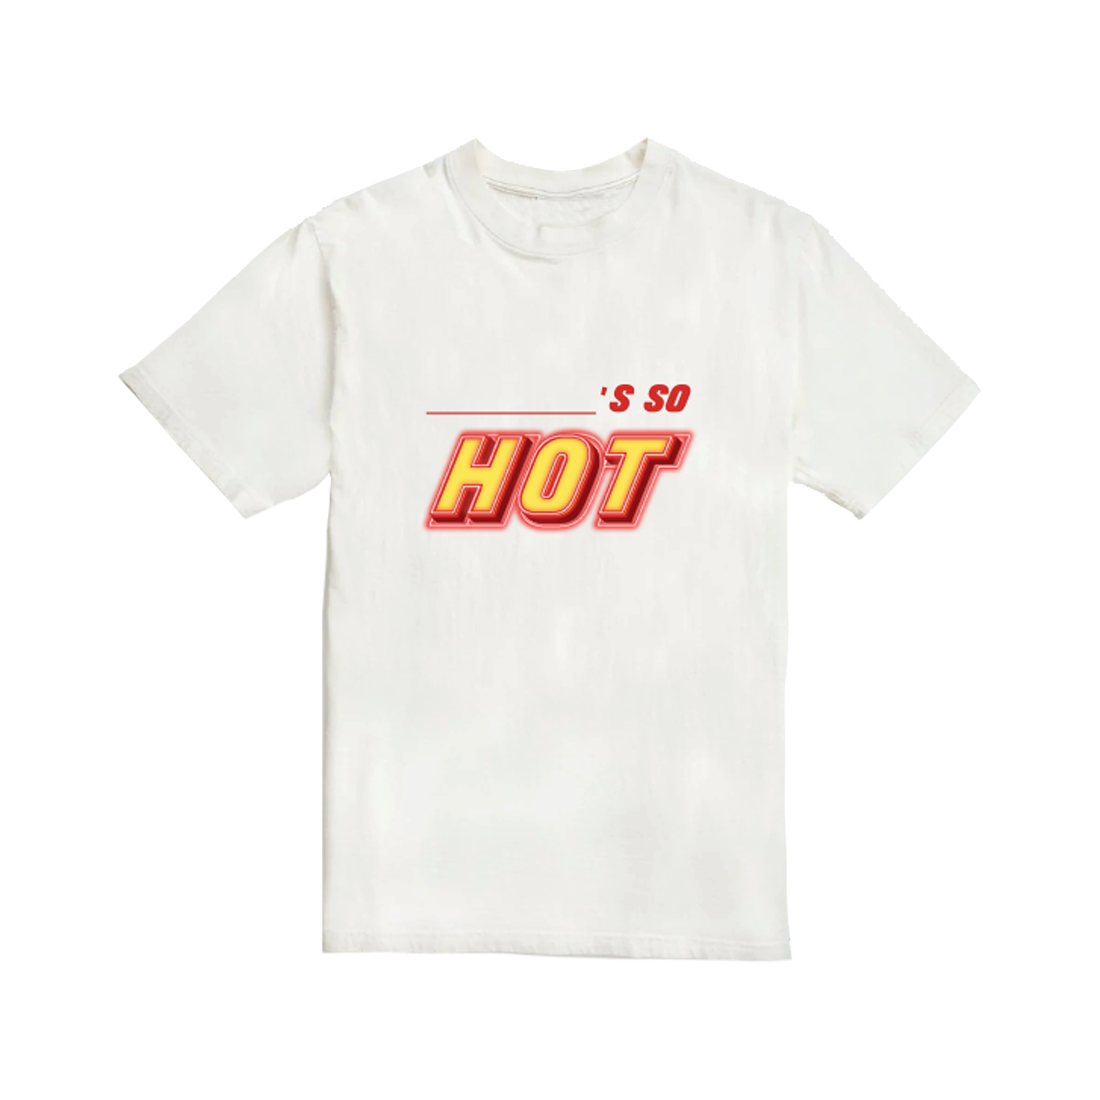 So Hot Tour T-Shirt